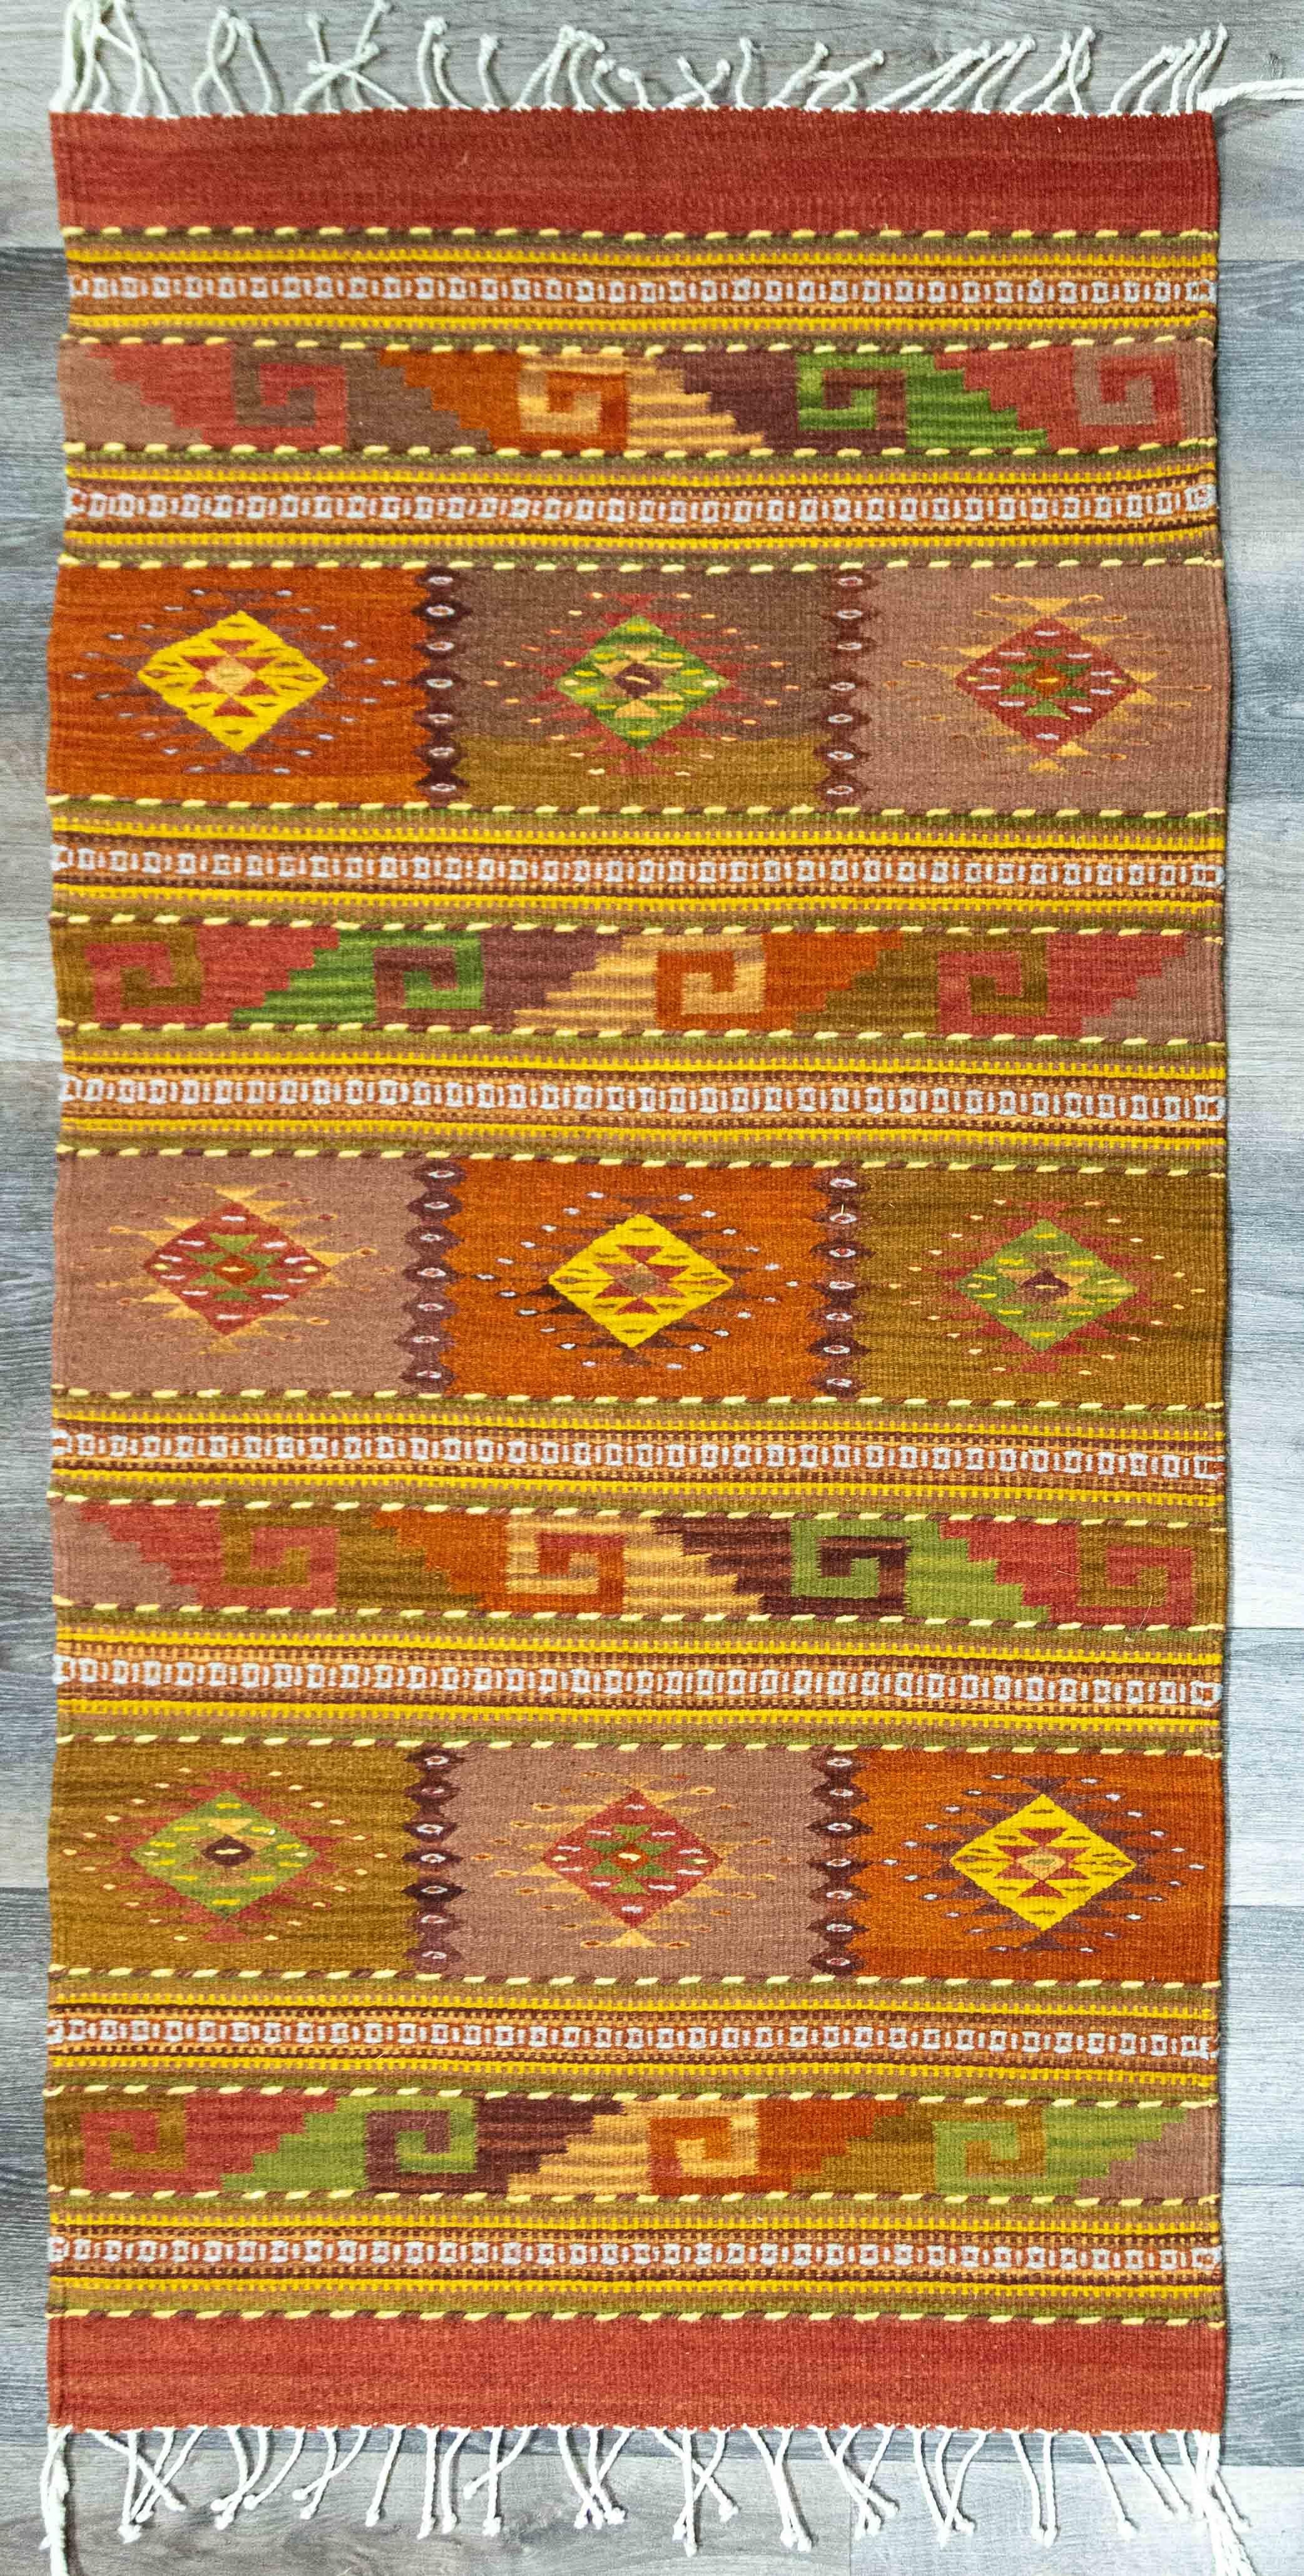 Matis Zapoteco, Handwoven Zapotec Wool Rug, Oaxaca, Mexico - Mixed Media Art by Javier Vicente